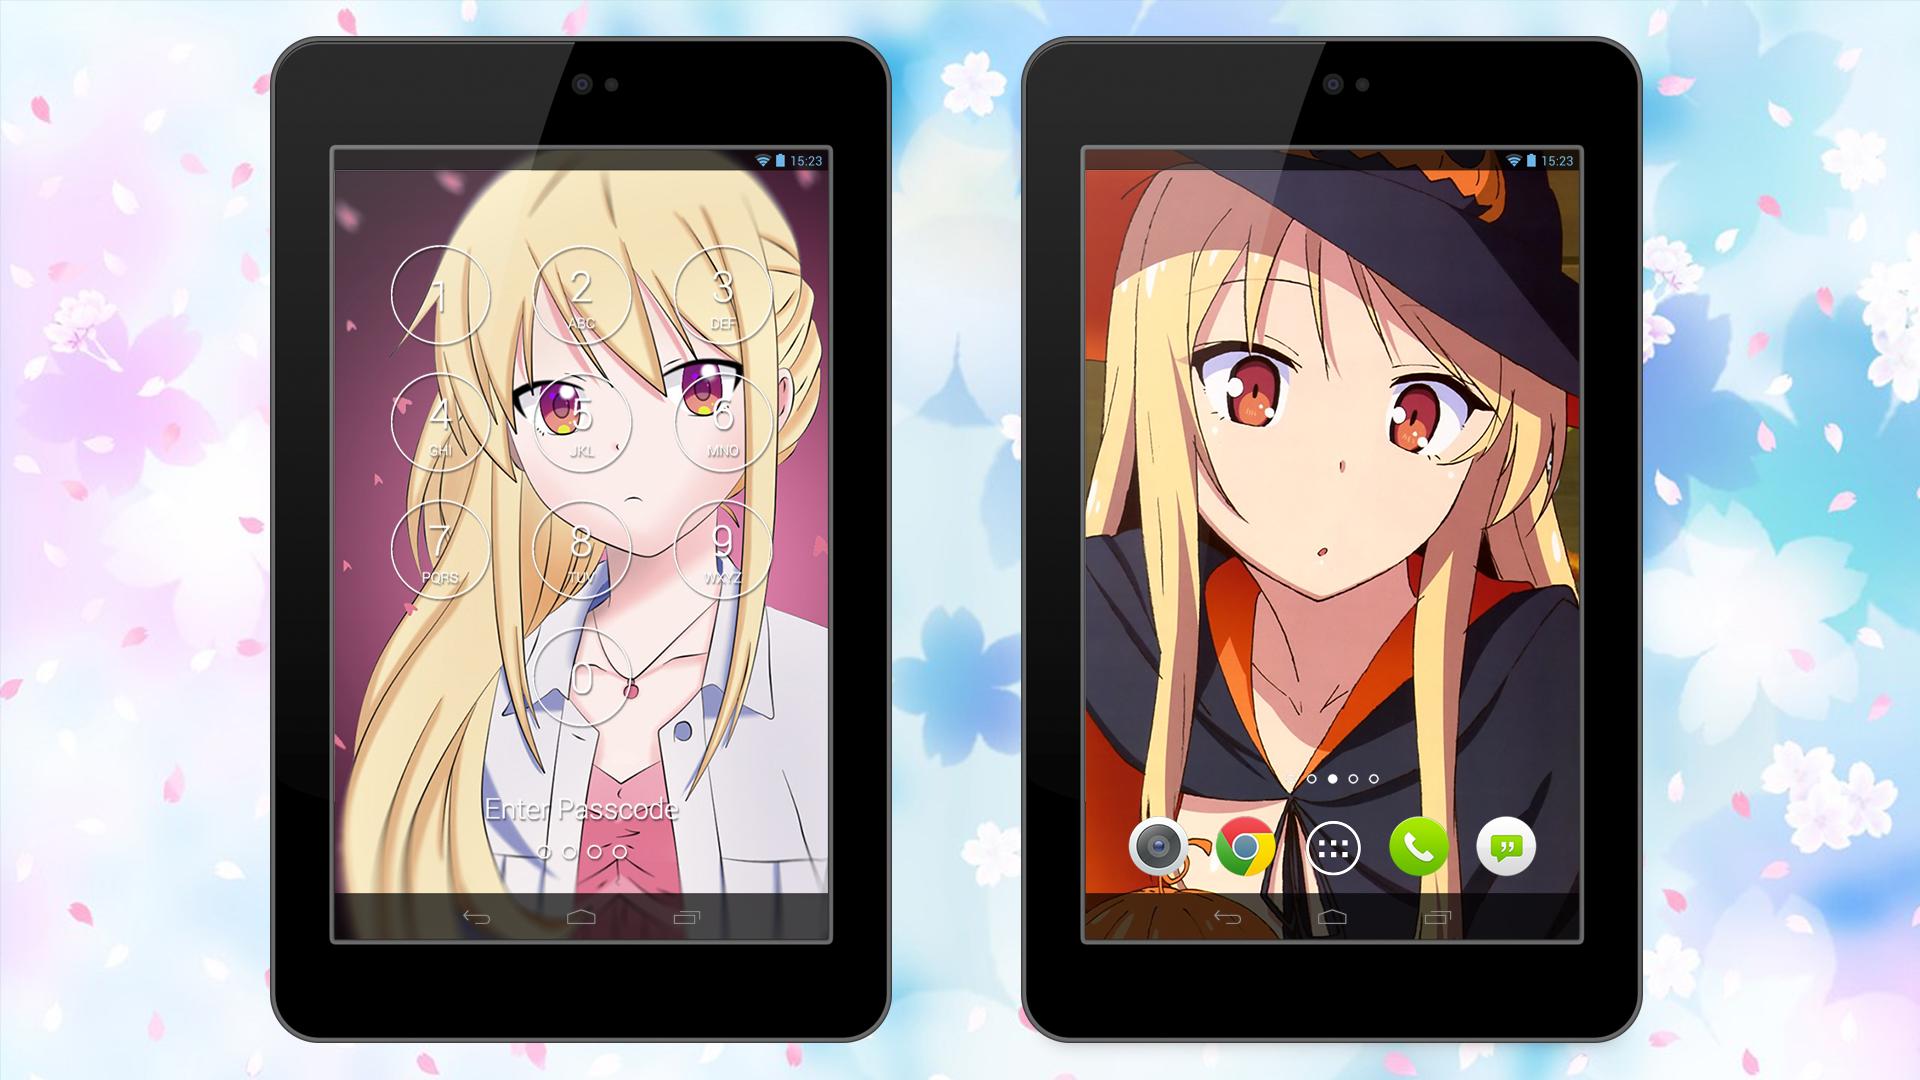 Mashiro Shiina Anime Lock Screen Wallpapers For Android Apk Download - shiina roblox